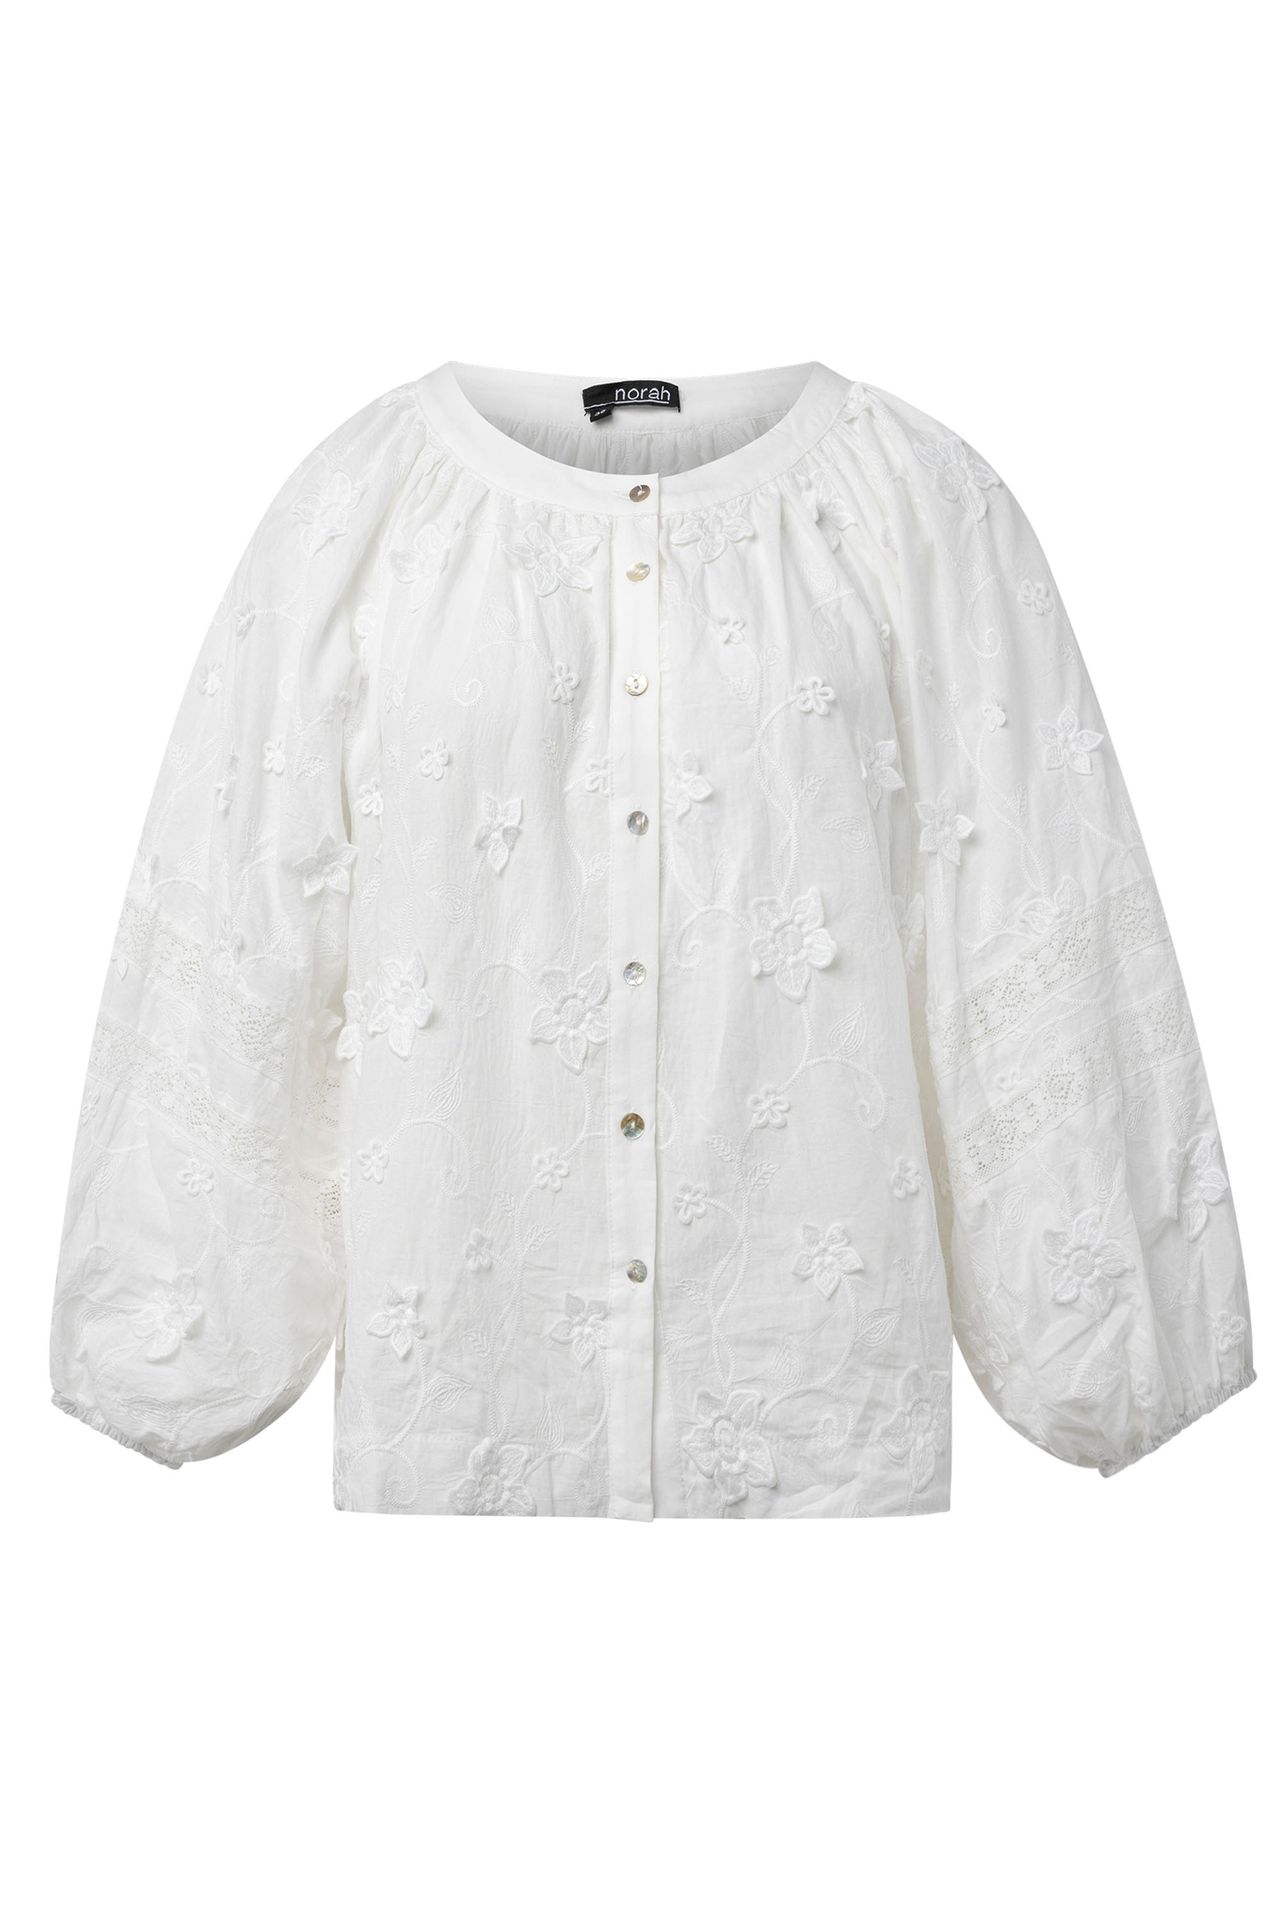 Norah Off white blouse off-white 214642-101